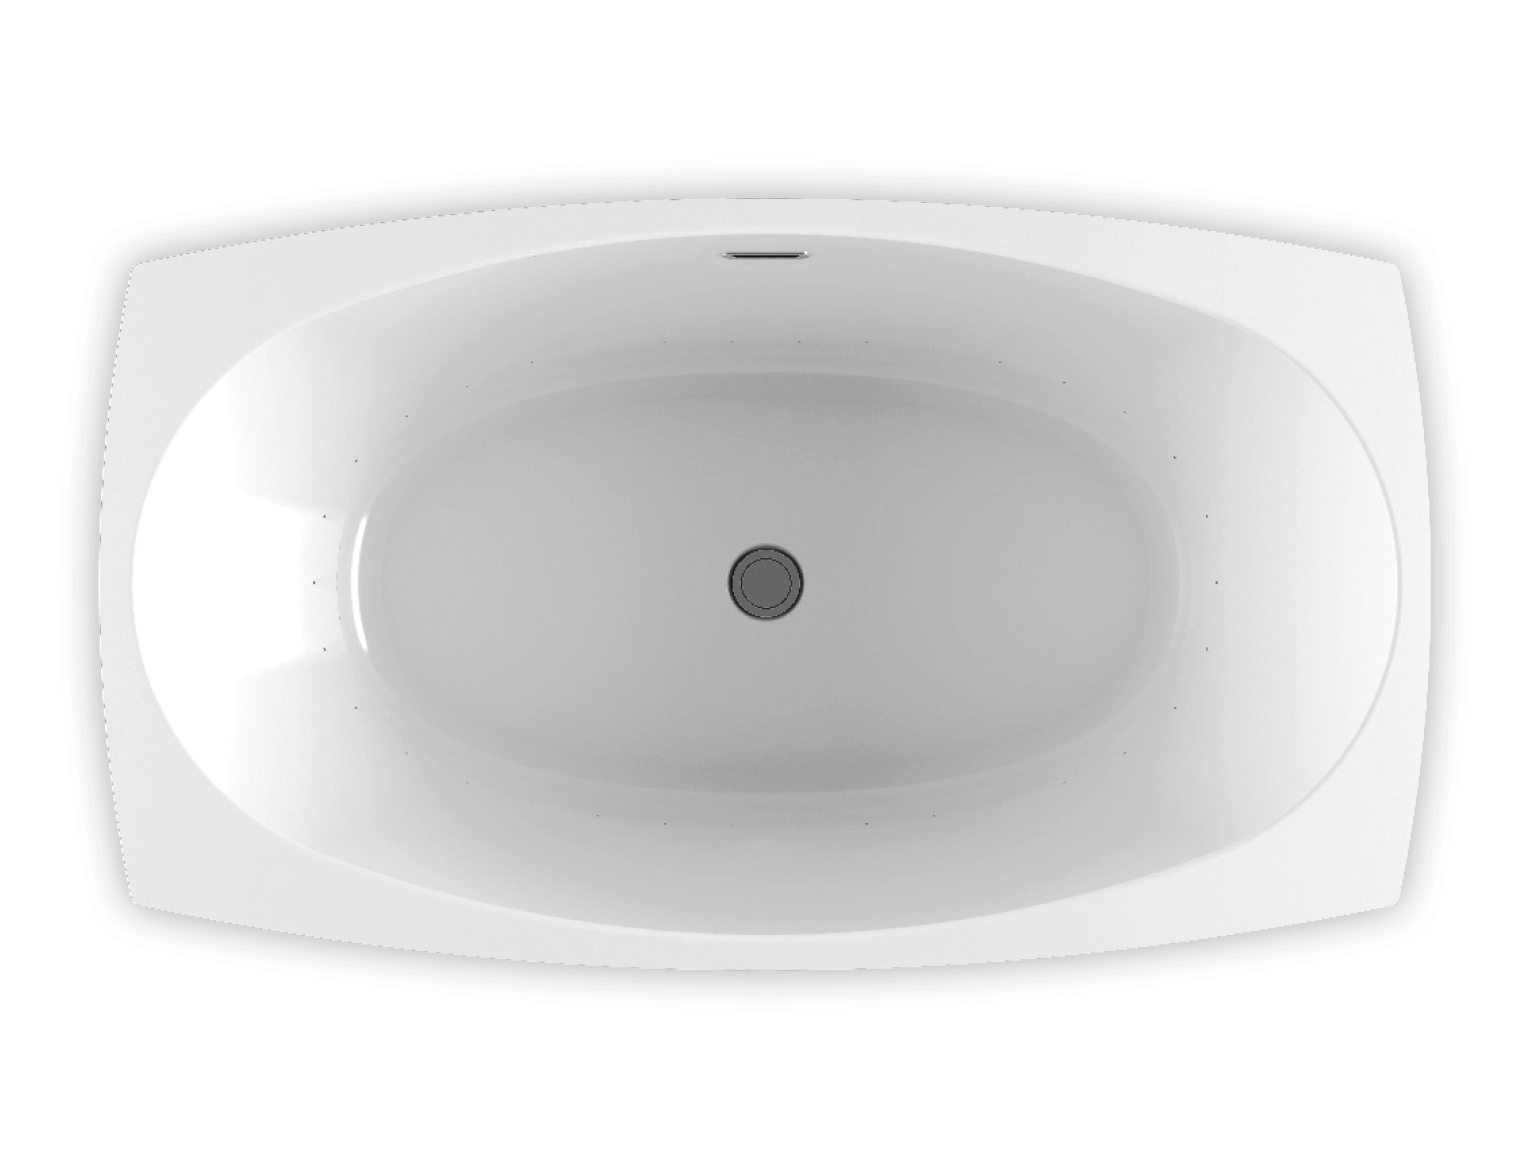 Bainultra Esthesia 6638 freestanding air jet bathtub for your modern bathroom